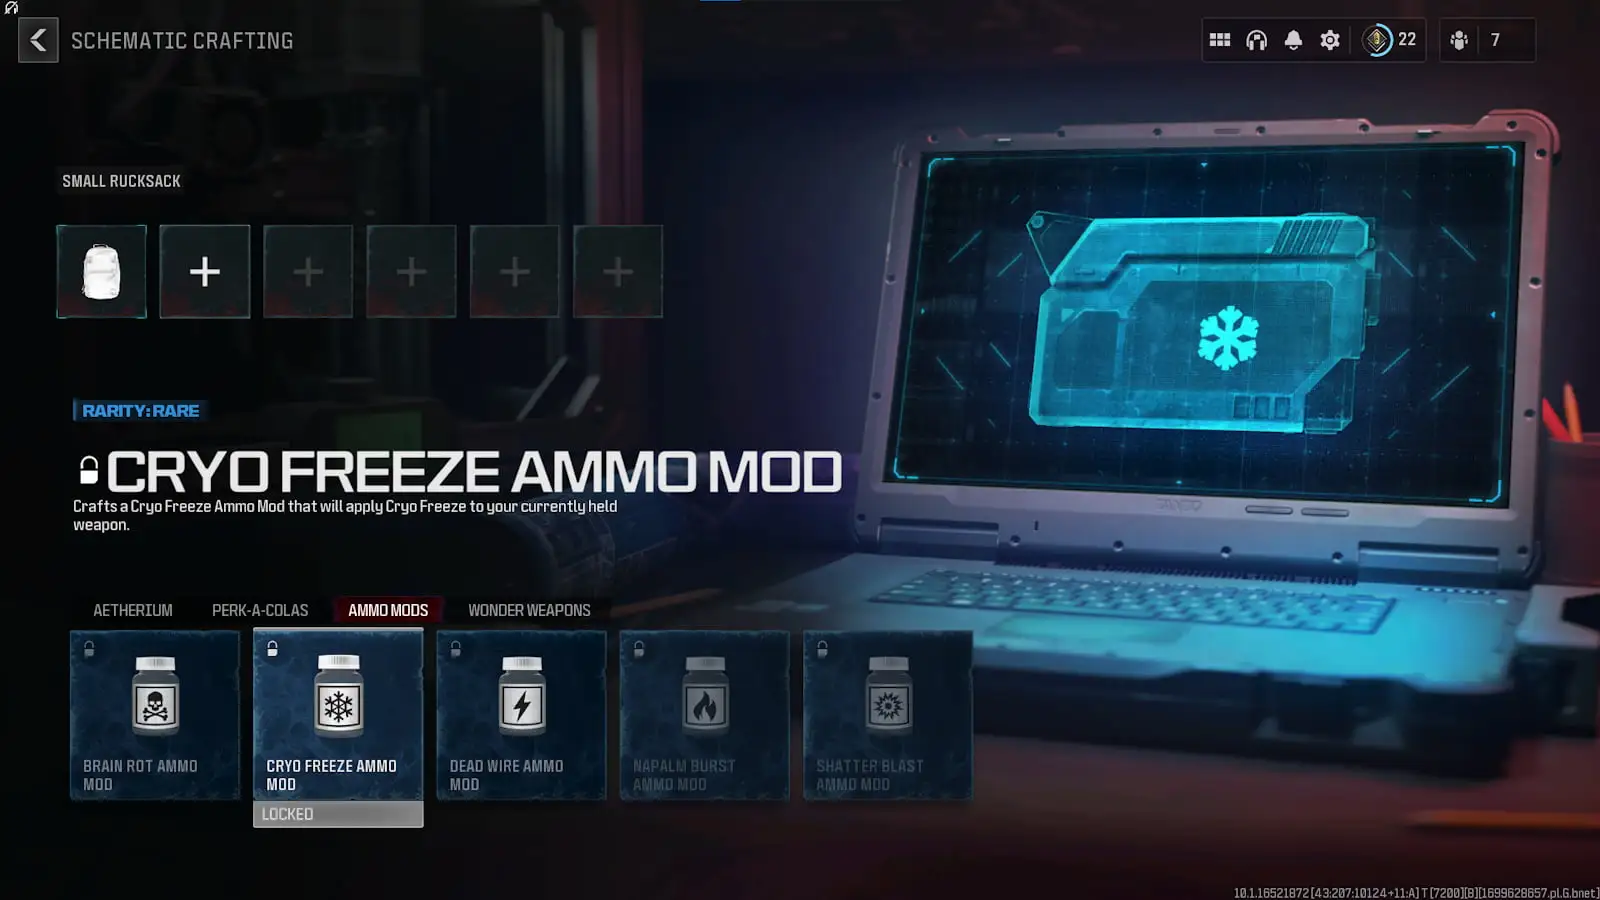 The Cryo Freeze ammo mod schematic page in Modern Warfare 3 Zombies menu.